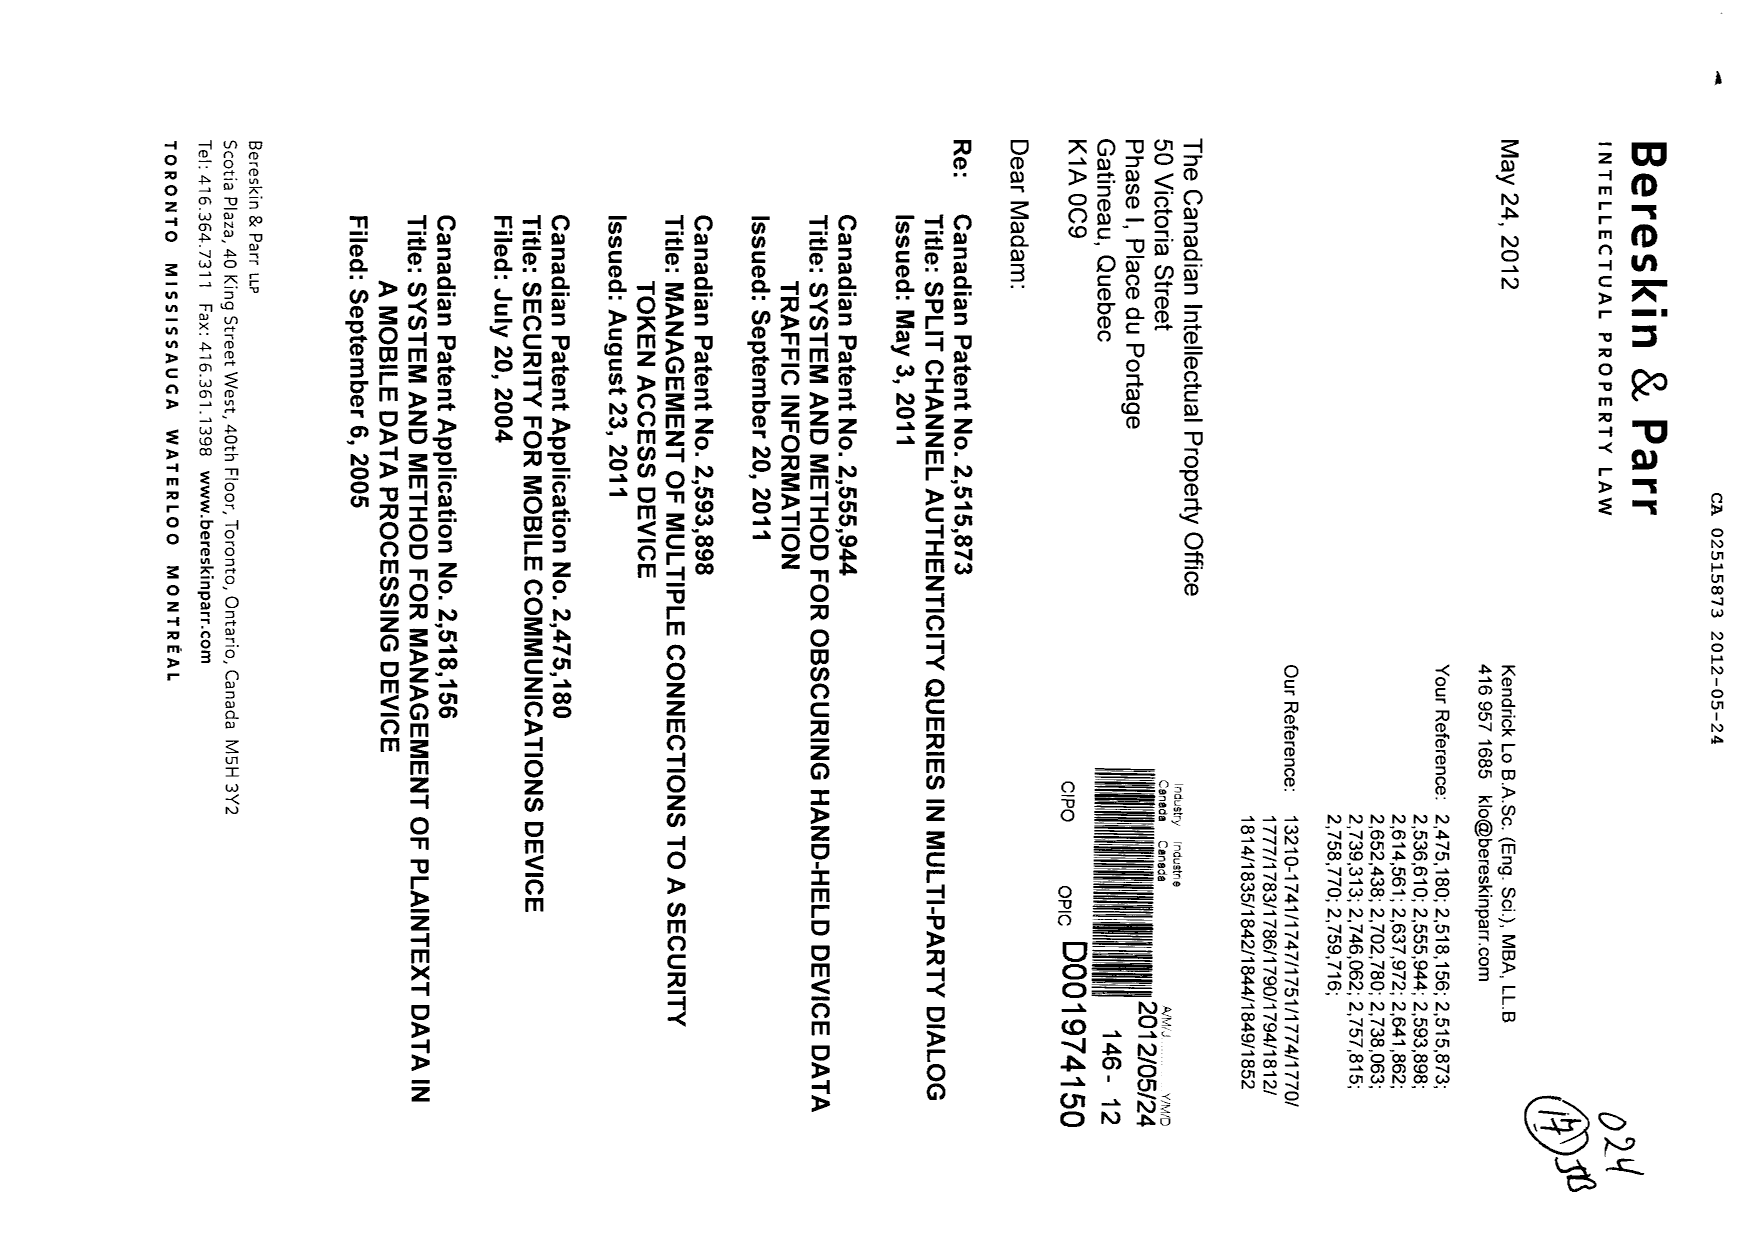 Canadian Patent Document 2757815. Correspondence 20120524. Image 1 of 5